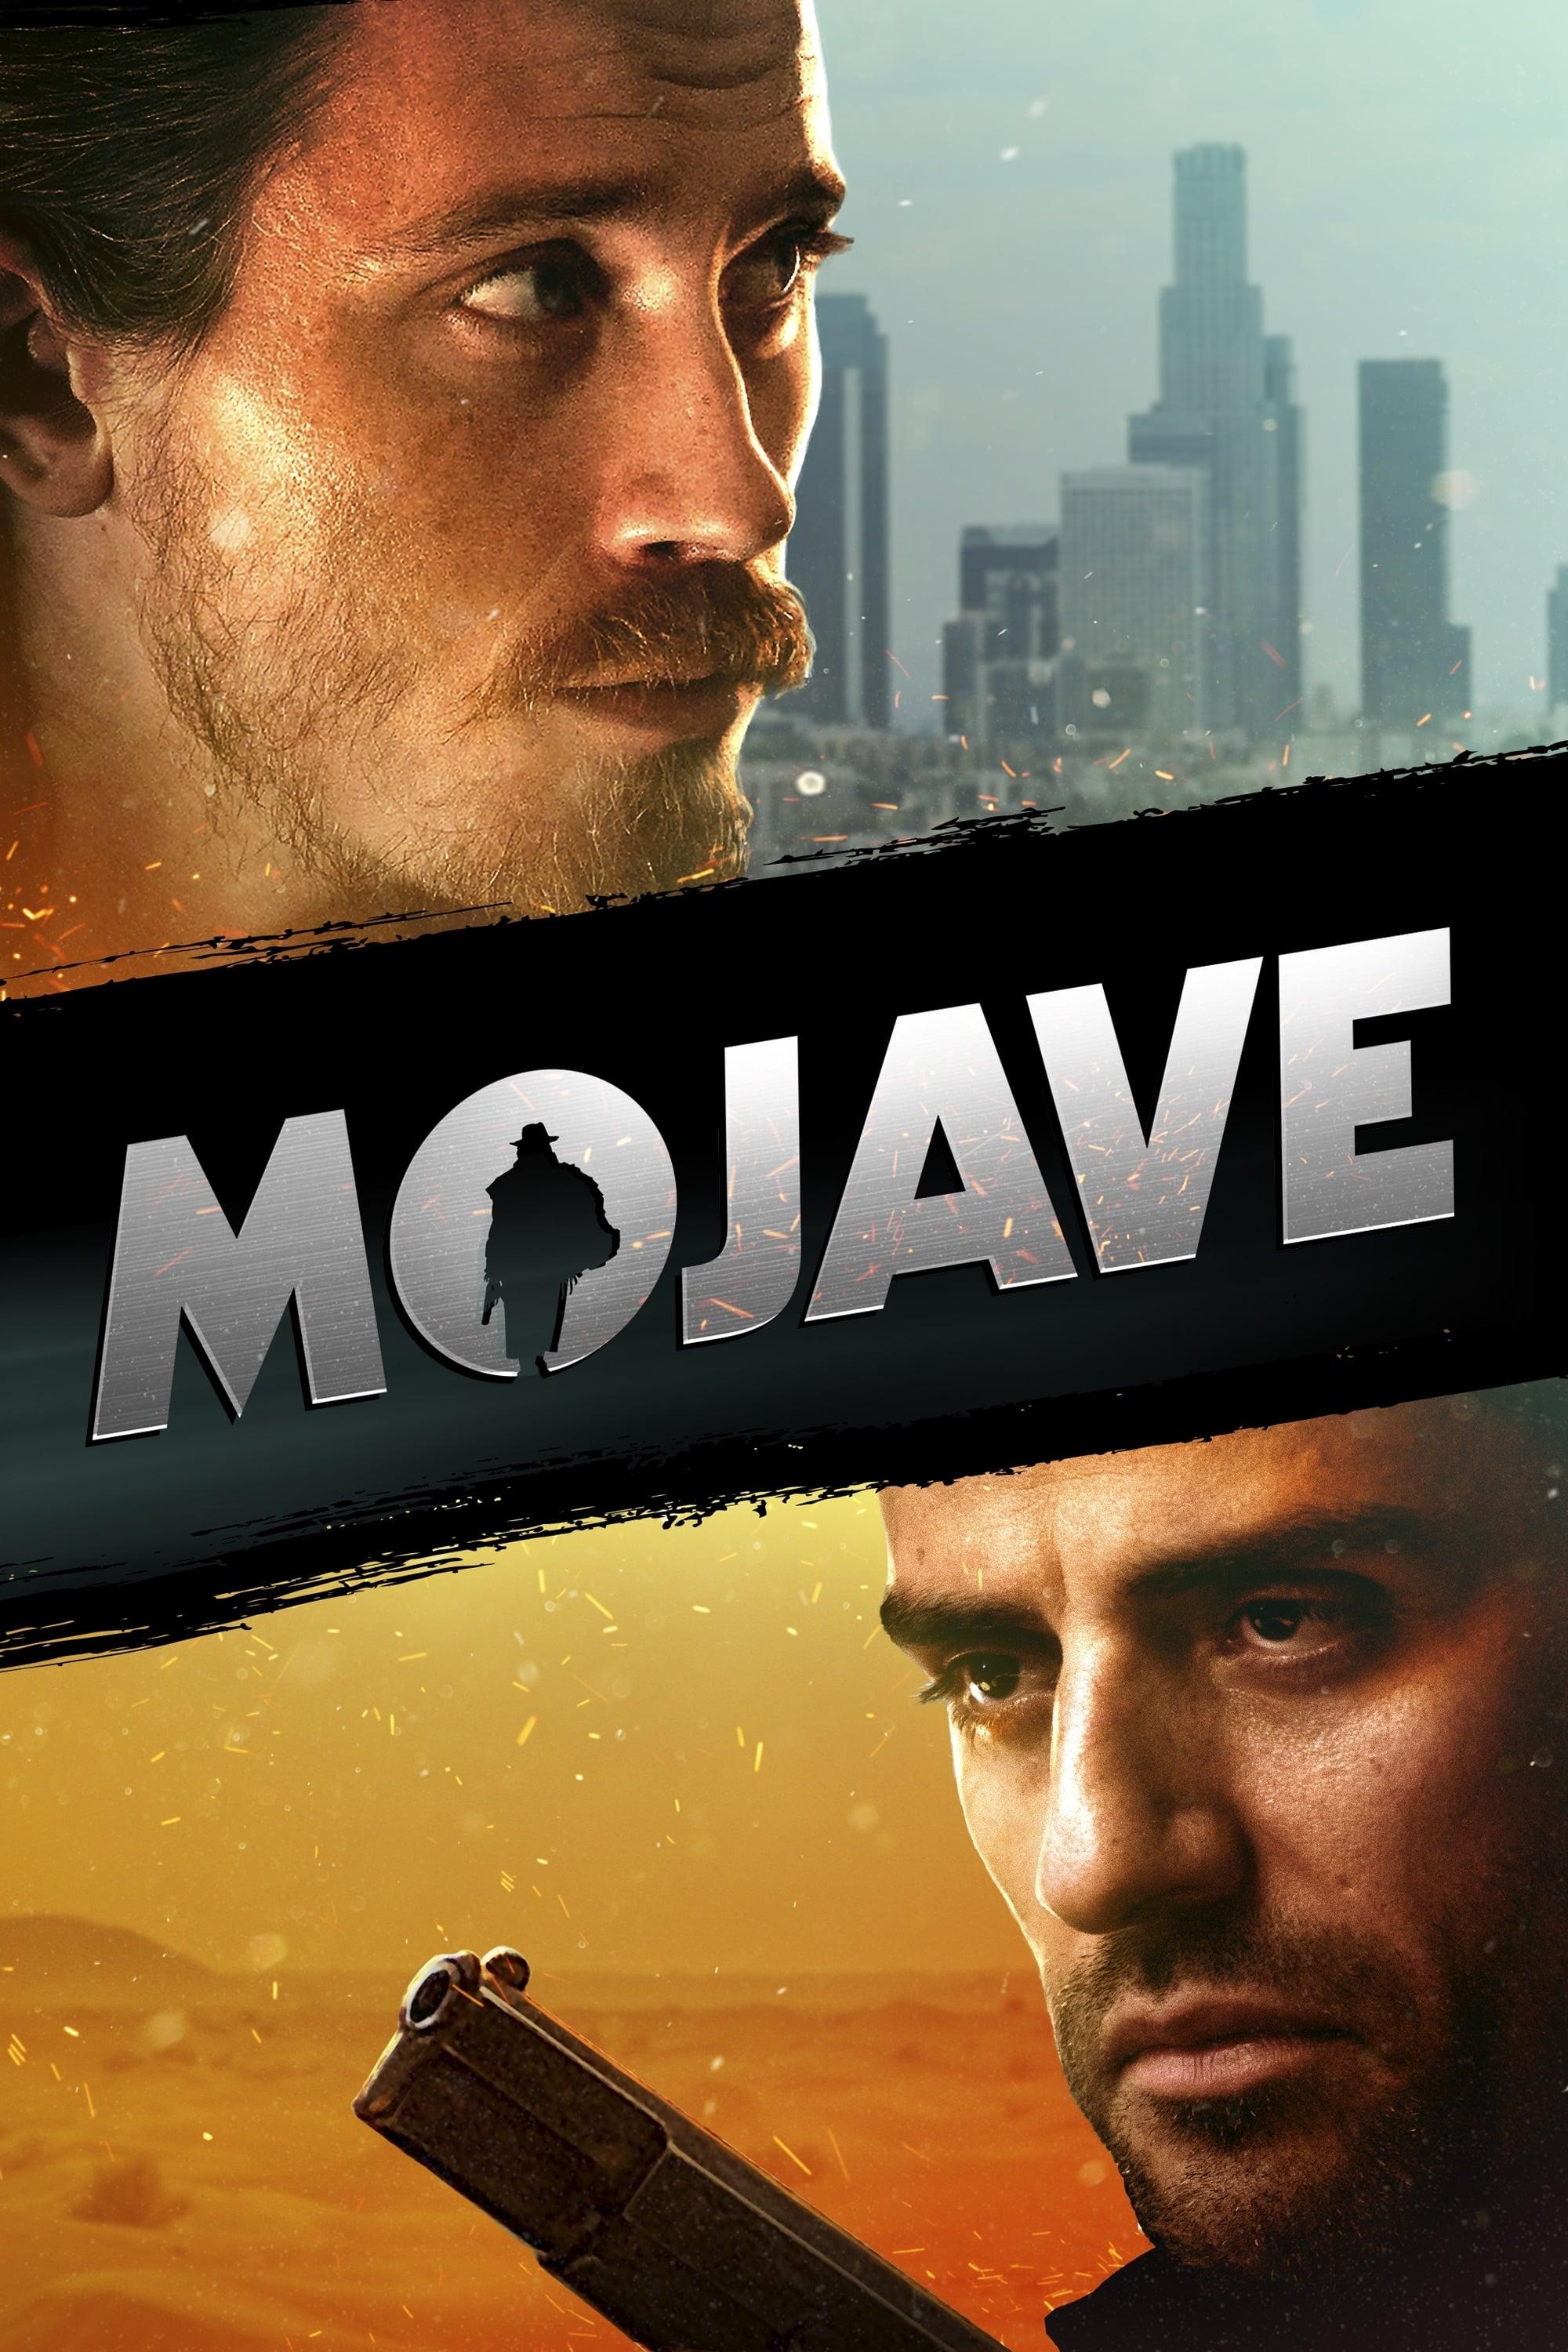 Mojave poster